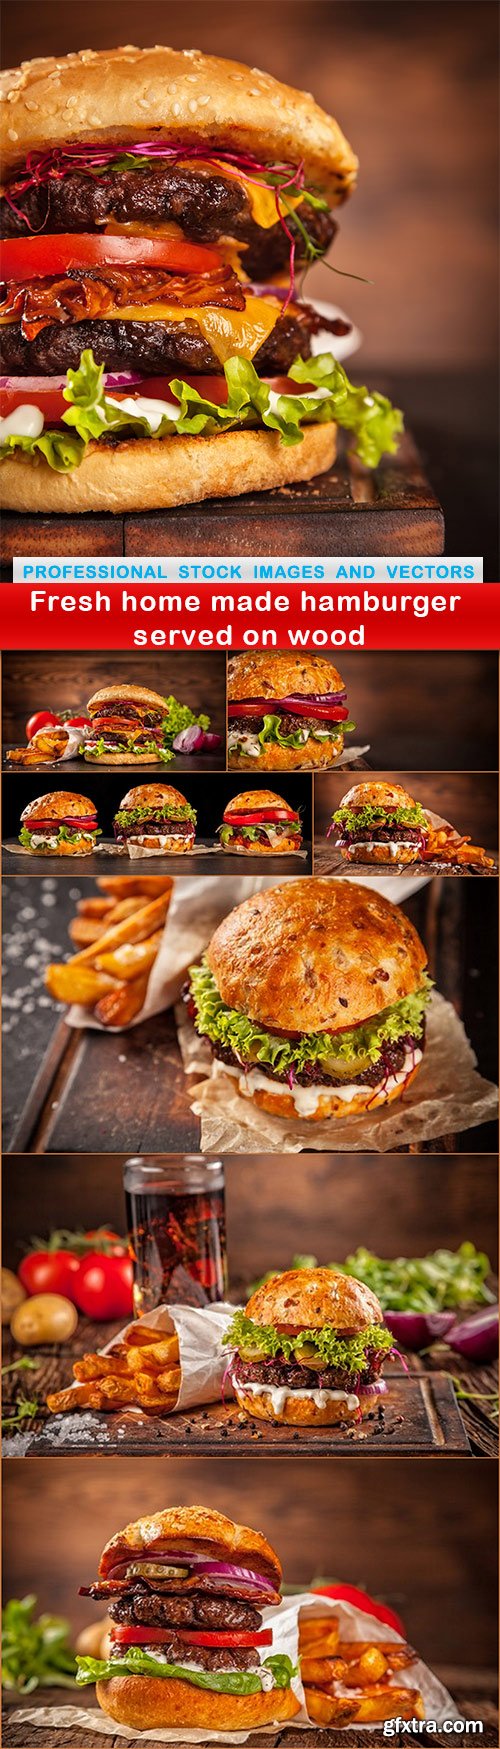 Fresh home made hamburger served on wood - 8 UHQ JPEG